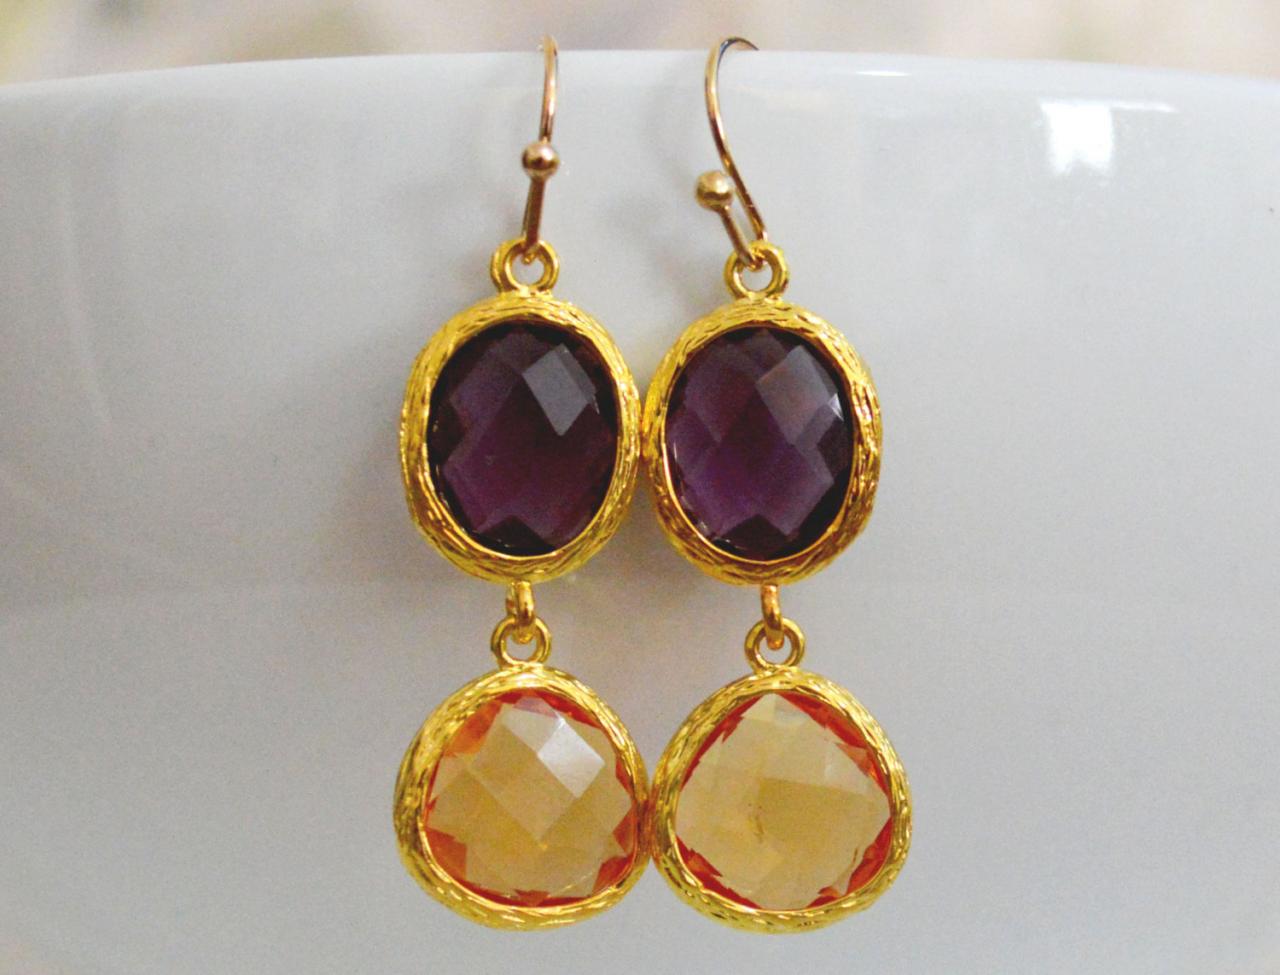 Glass Drop Earrings, Amethyst & Topaz Drop Earrings, Dangle Earrings, Gold Plated Earrings/bridesmaid Gifts/everyday Jewelry/